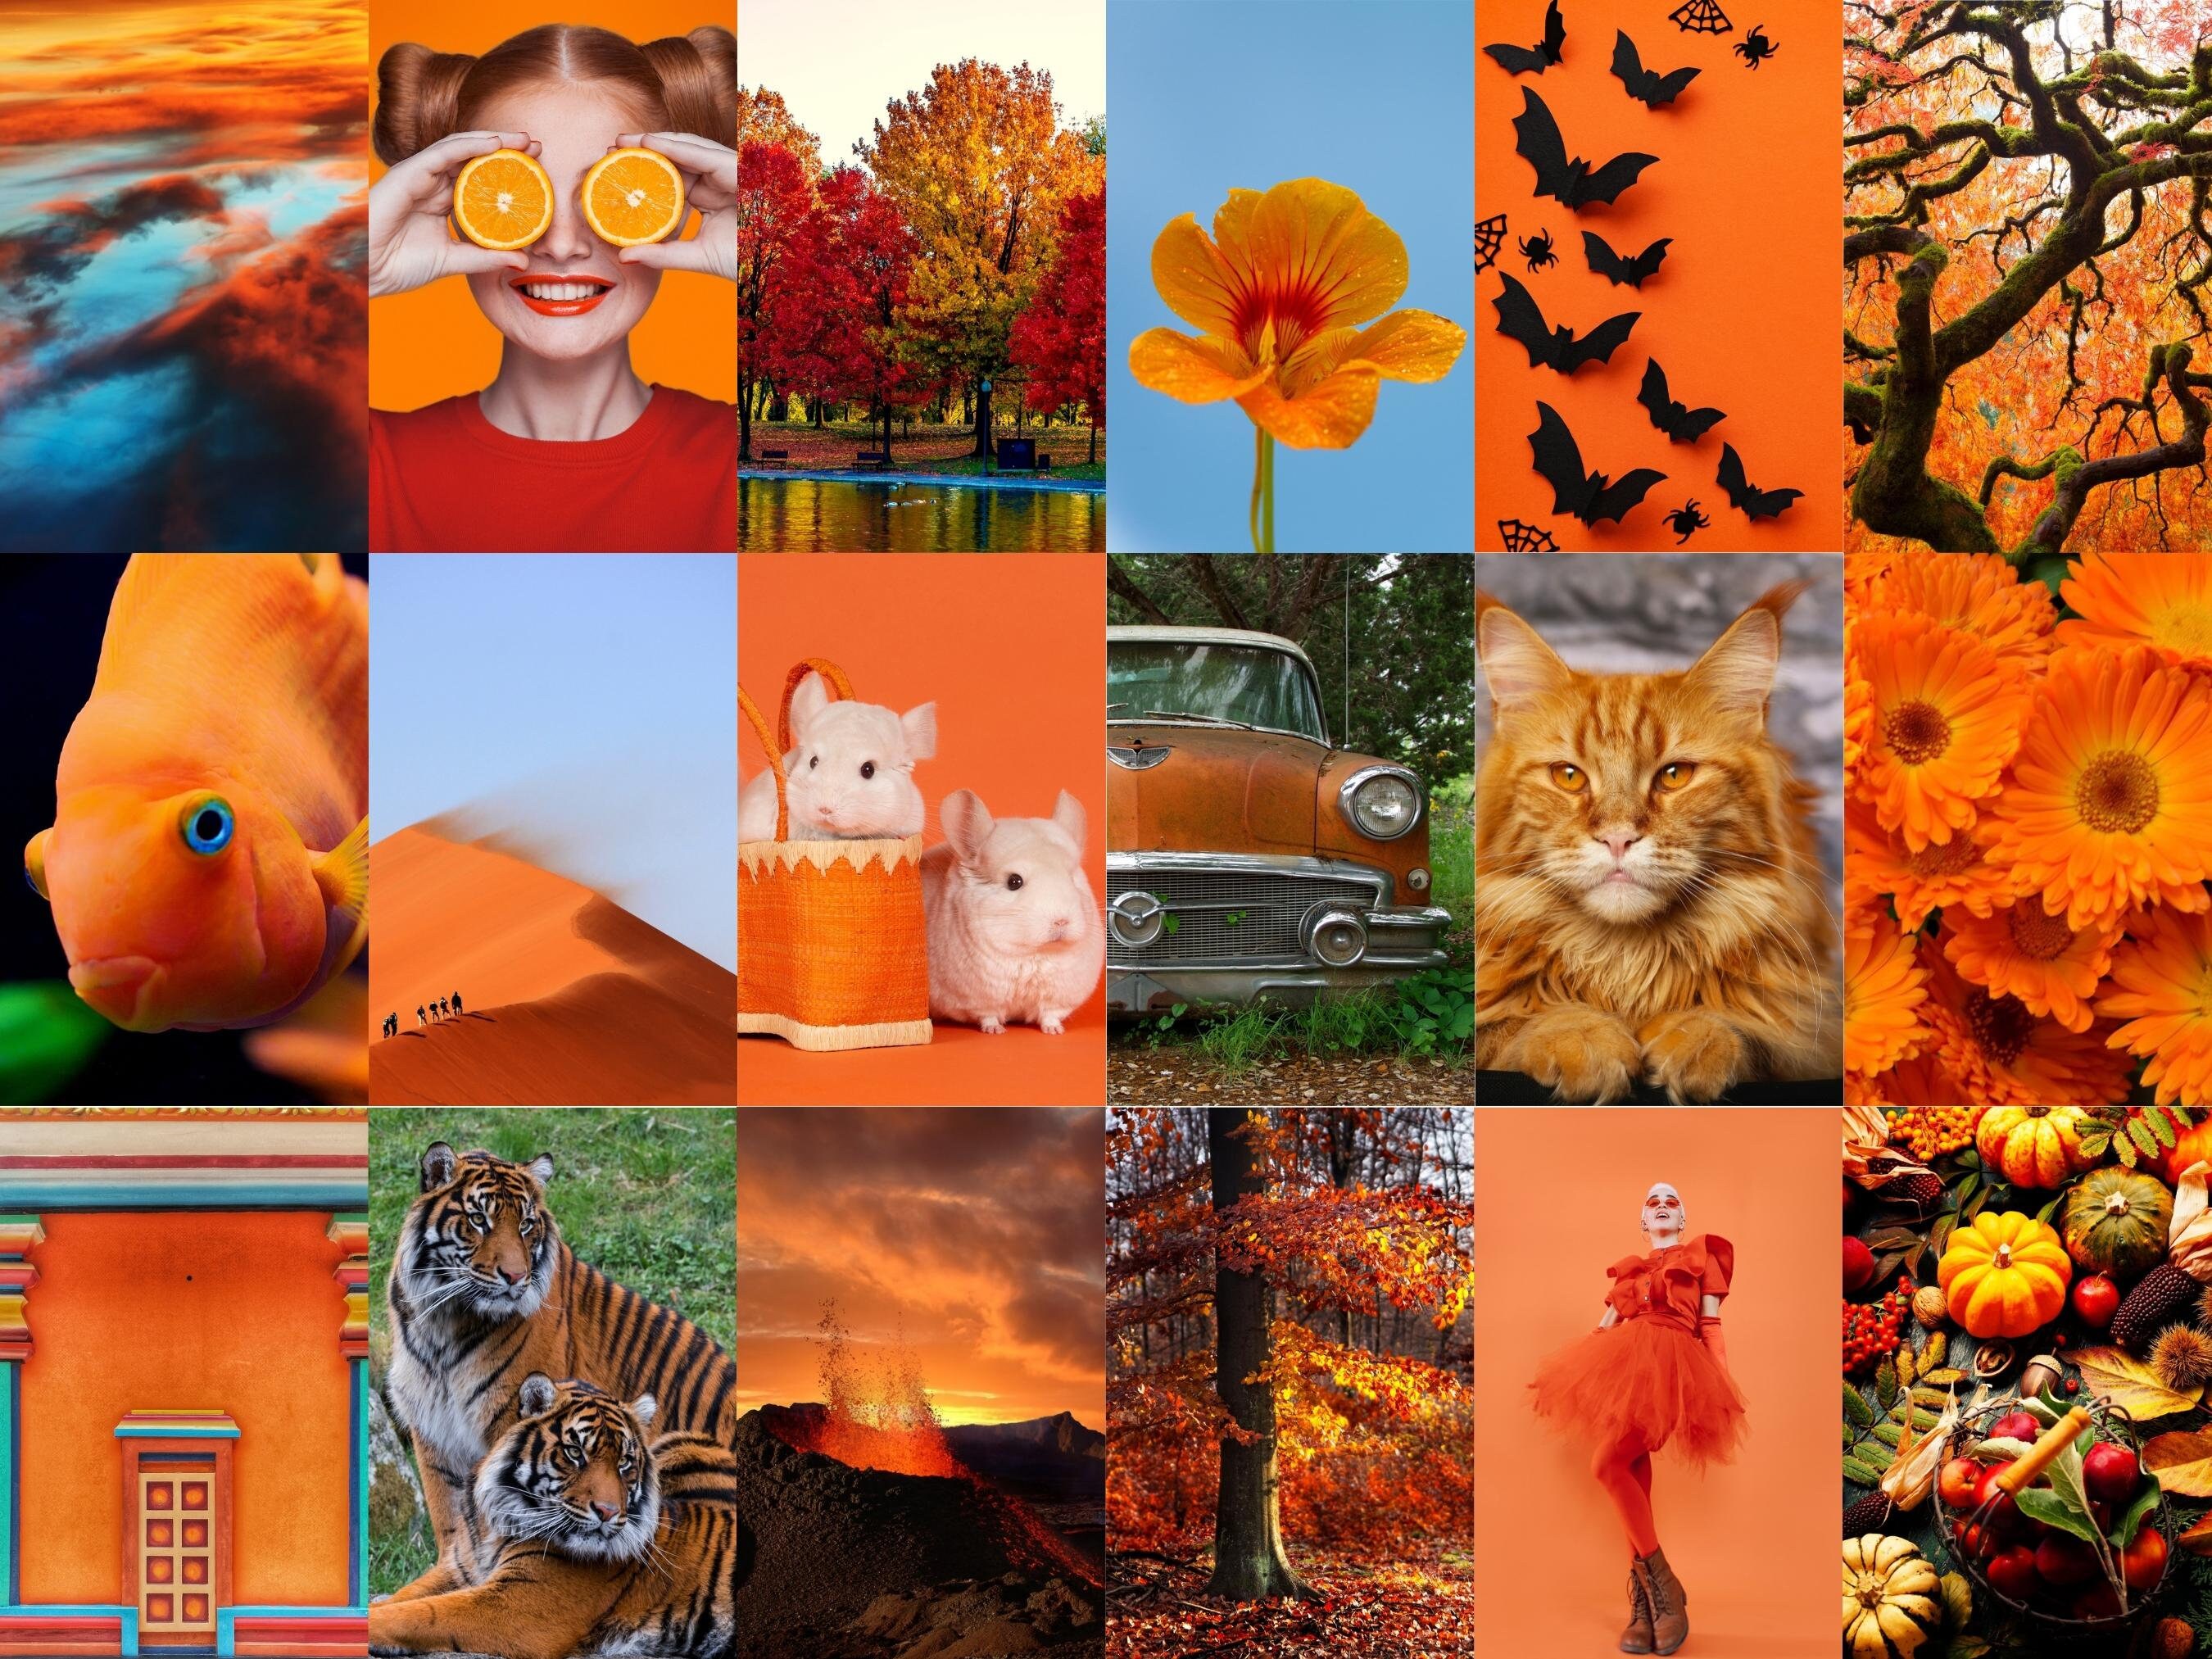 Collage of art supplies stock photo. Image of orange - 99114312